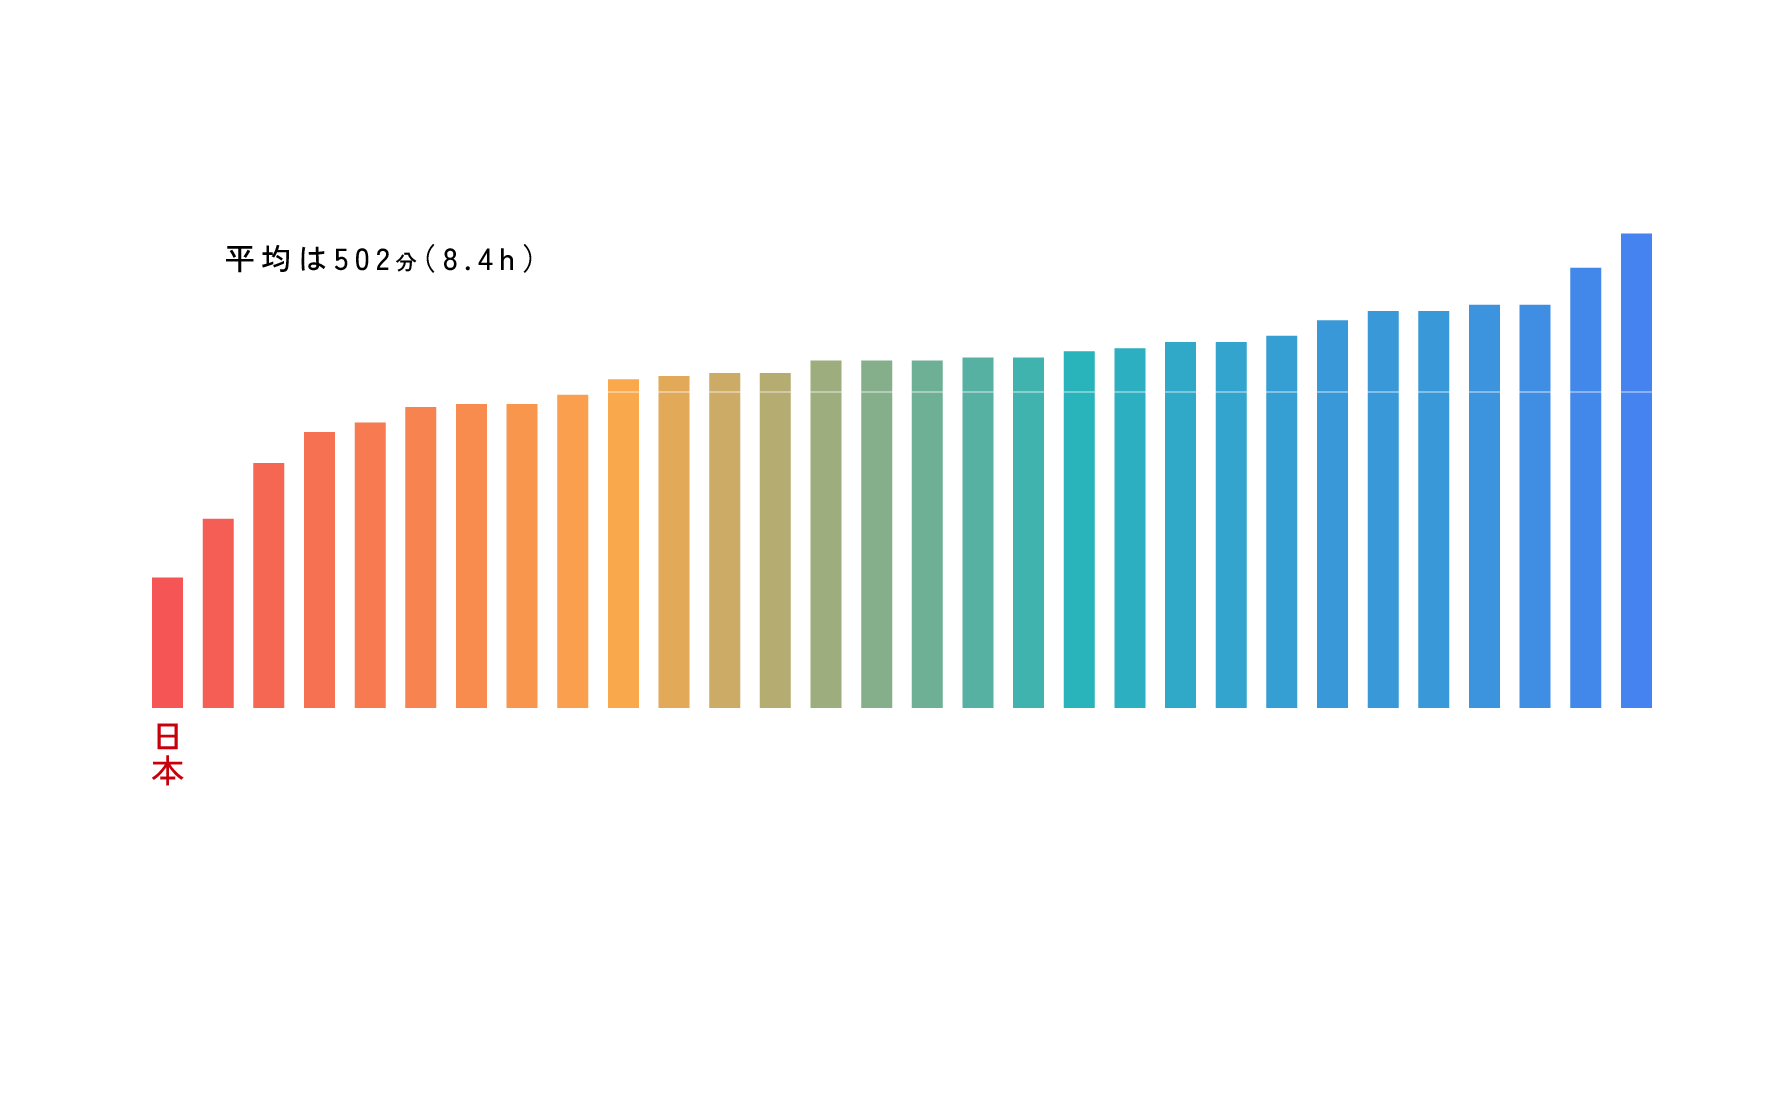 OECD調査対象国の睡眠時間グラフ